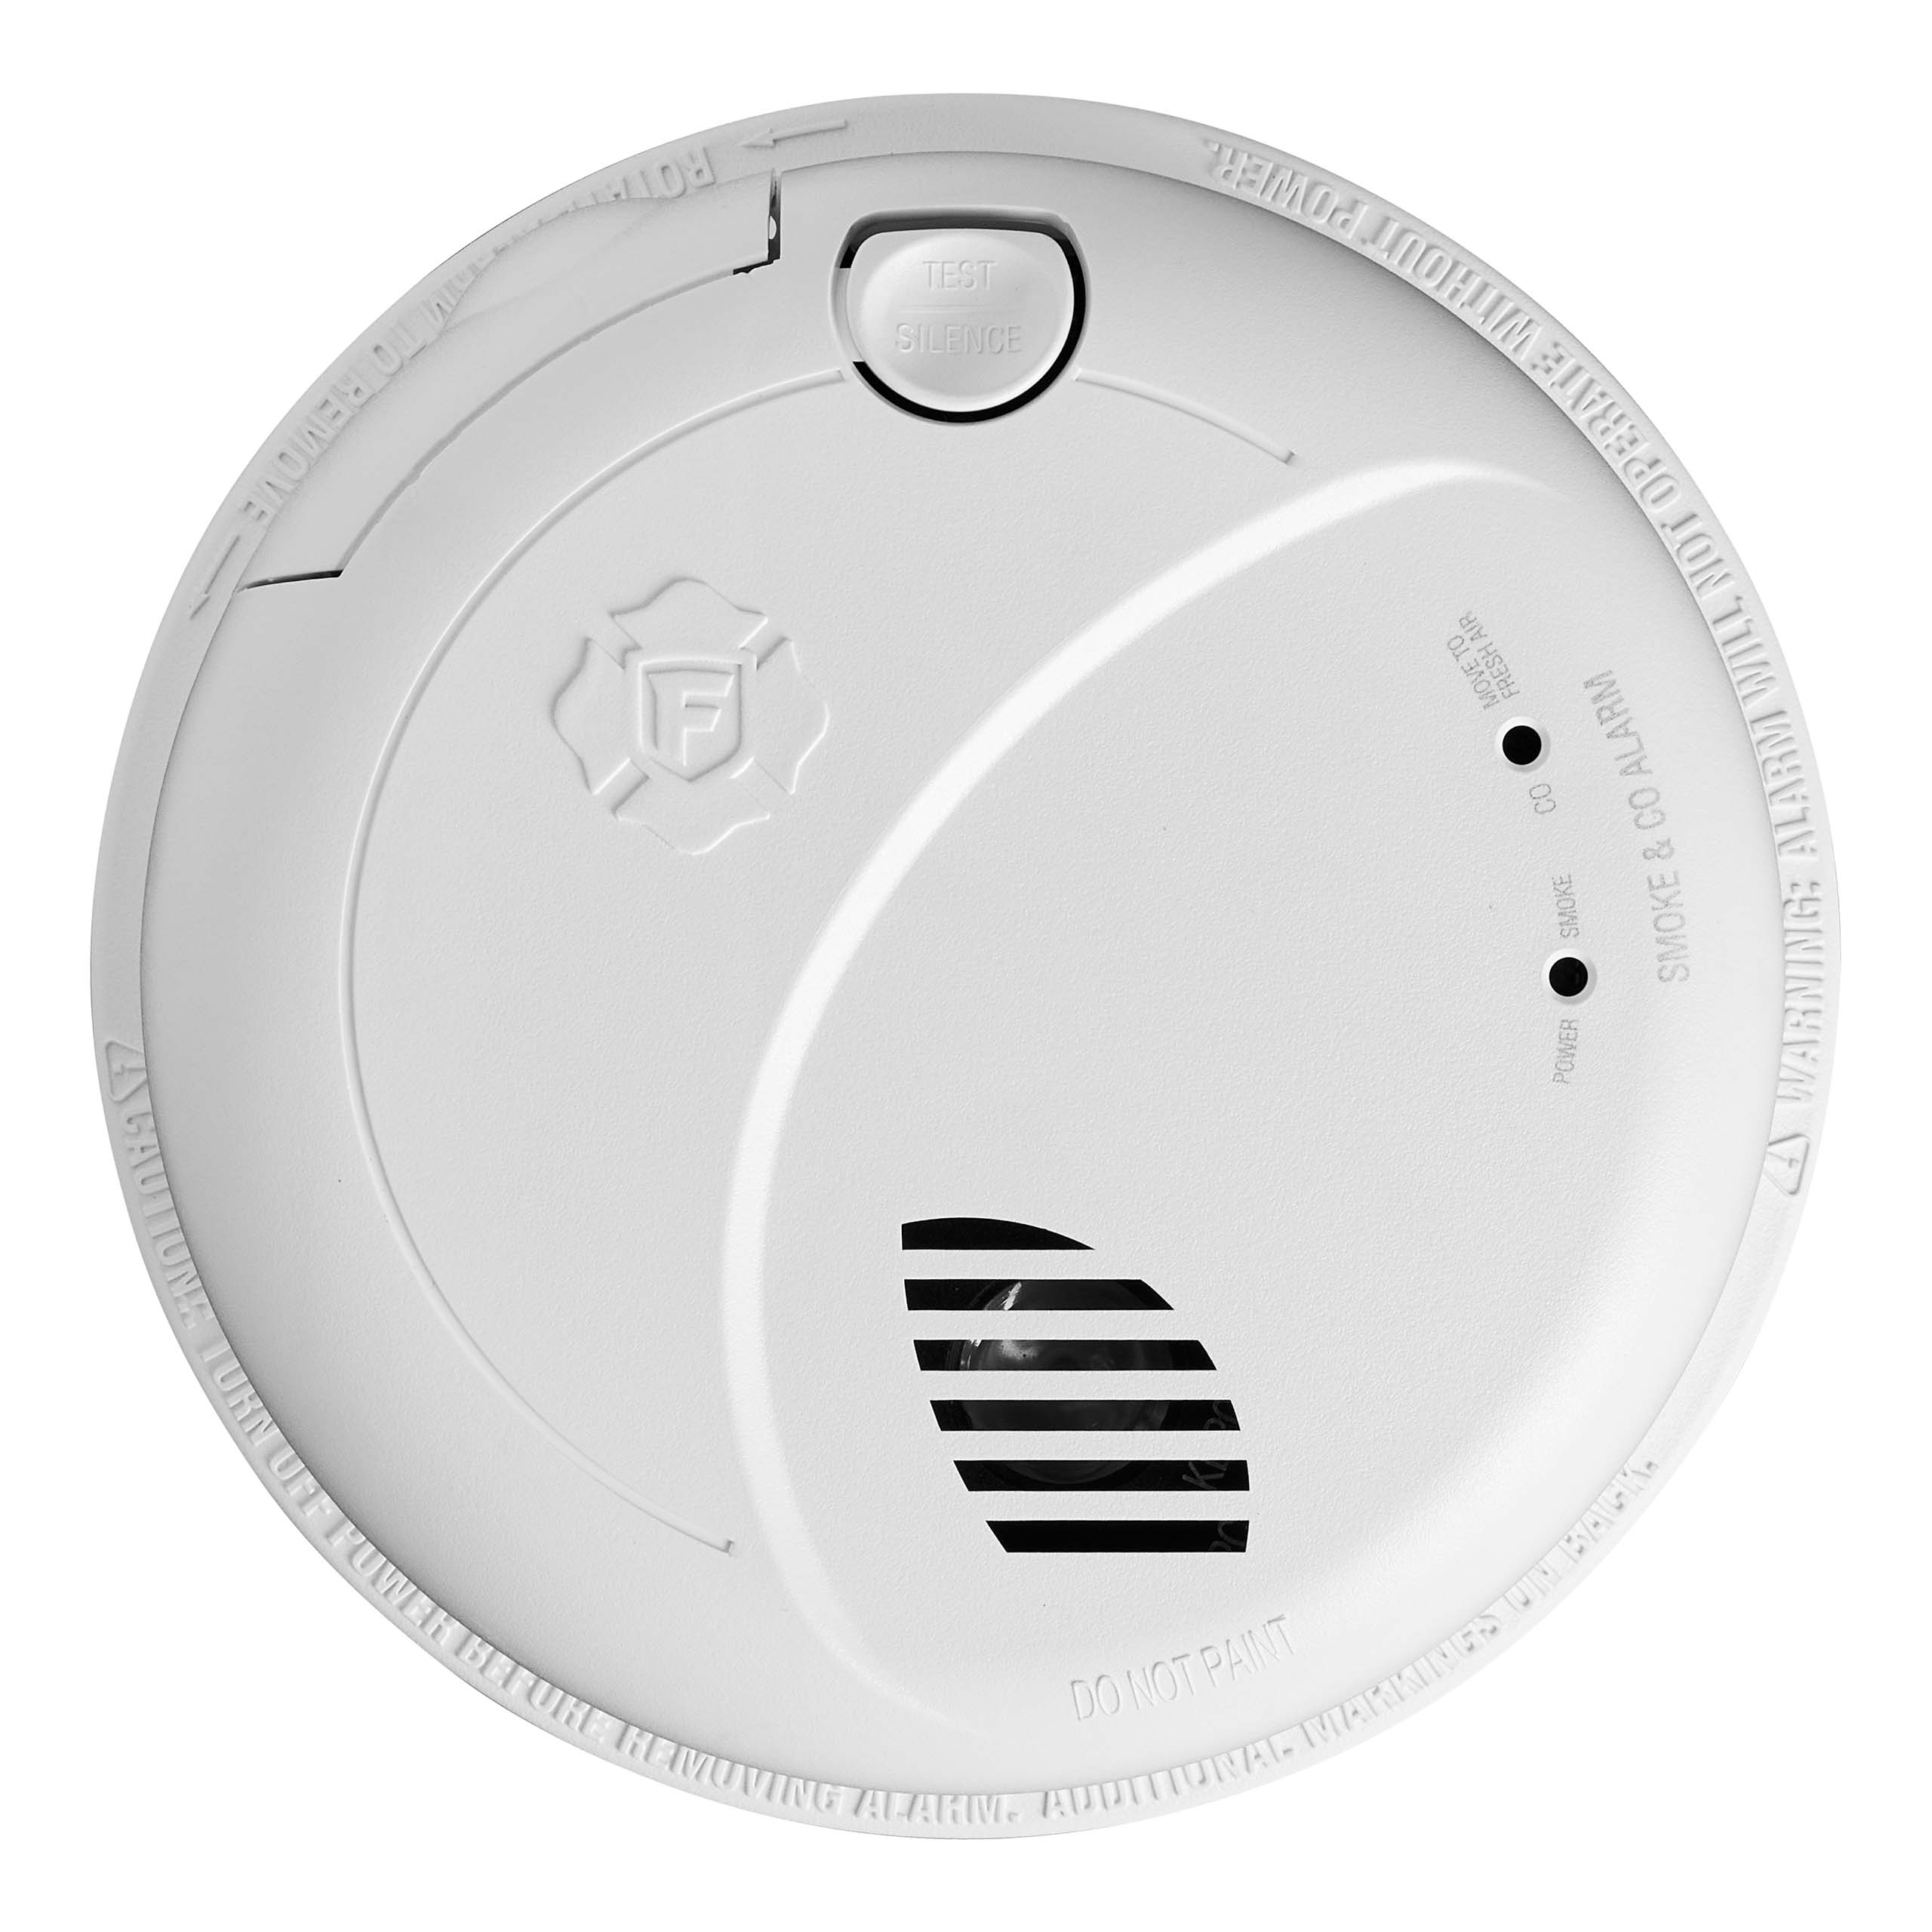 X-Sense XP01-W smoke, carbon monoxide detector review: Whole-home  protection on a budget